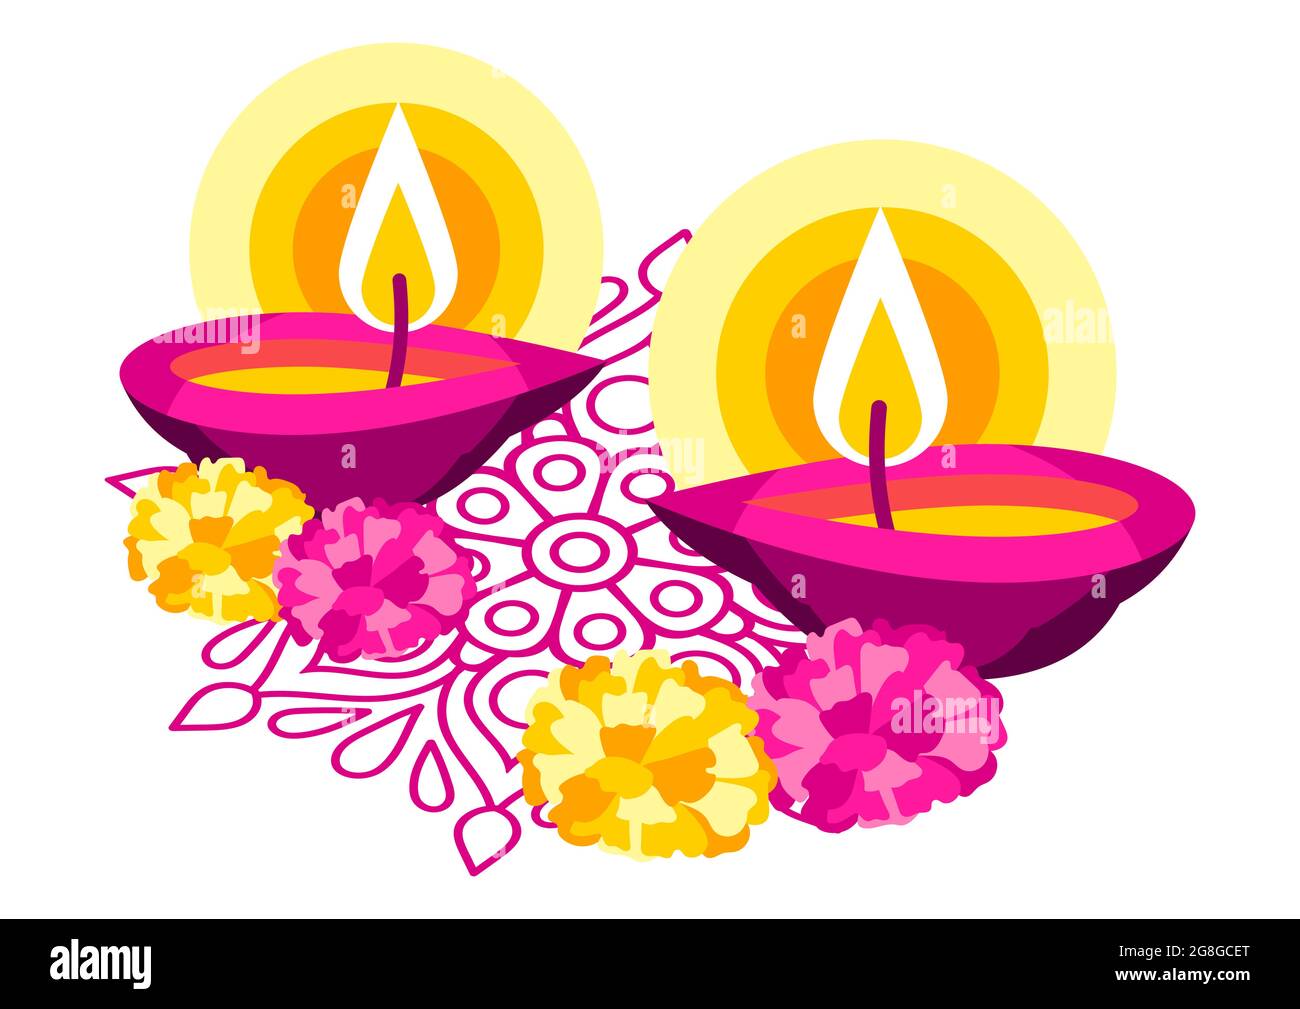 Happy Diwali greeting card. Deepavali or dipavali festival of ...